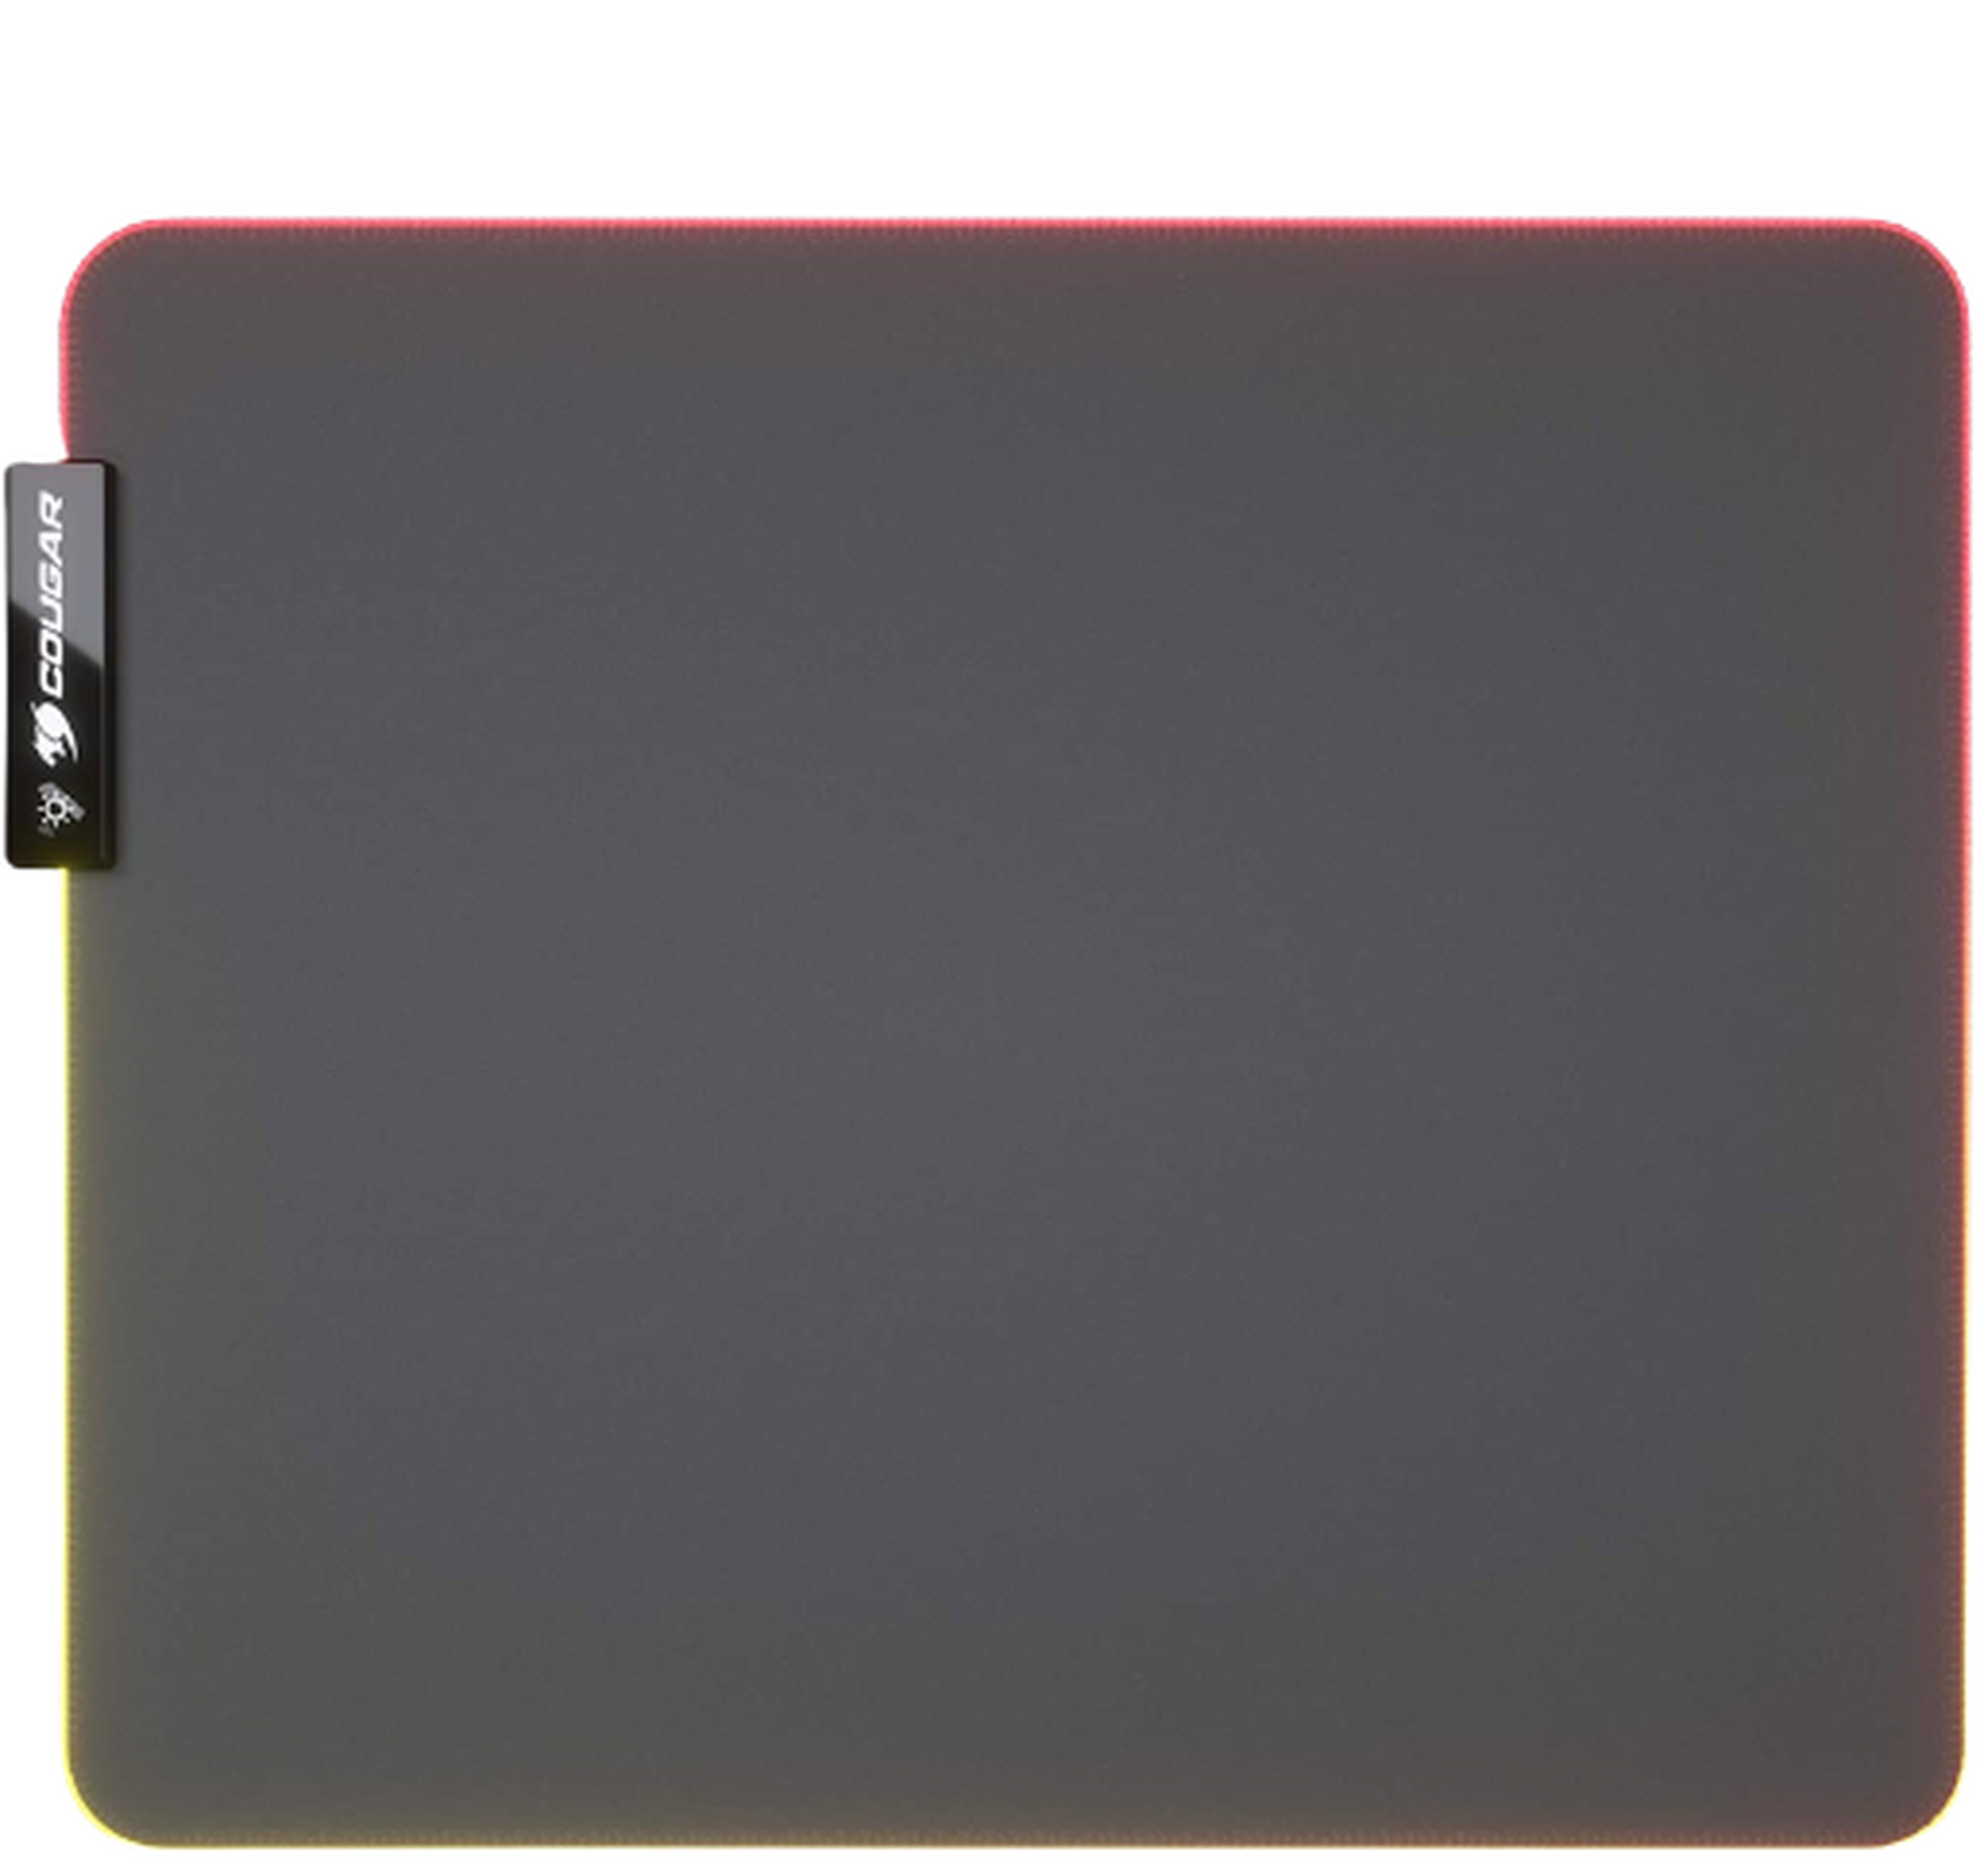 Cougar NEON X RGB Gaming Mouse Pad - Medium